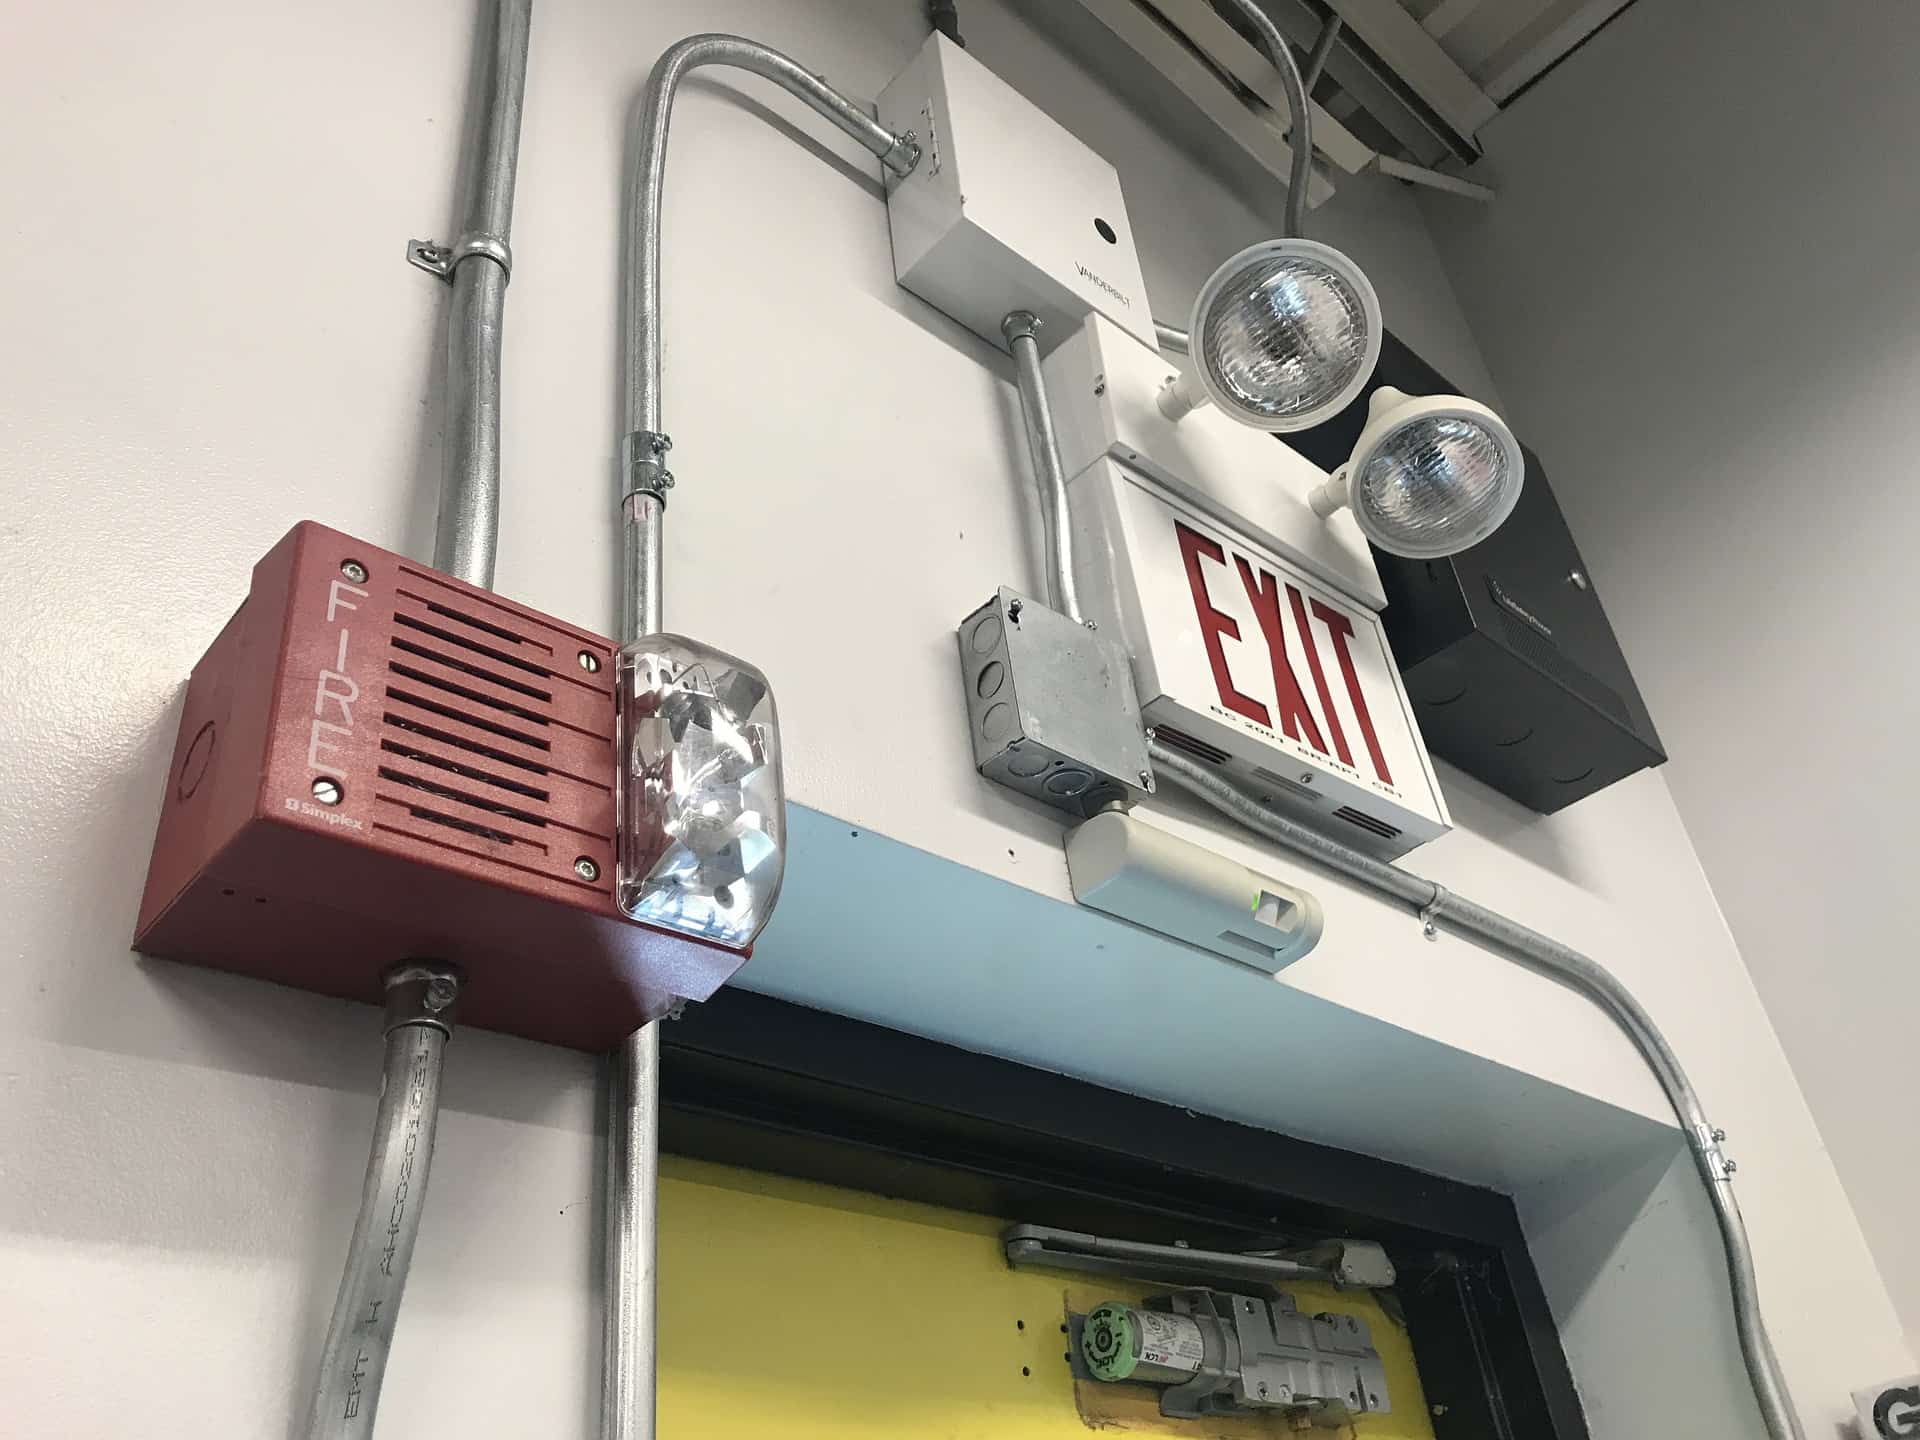 emergency lighting